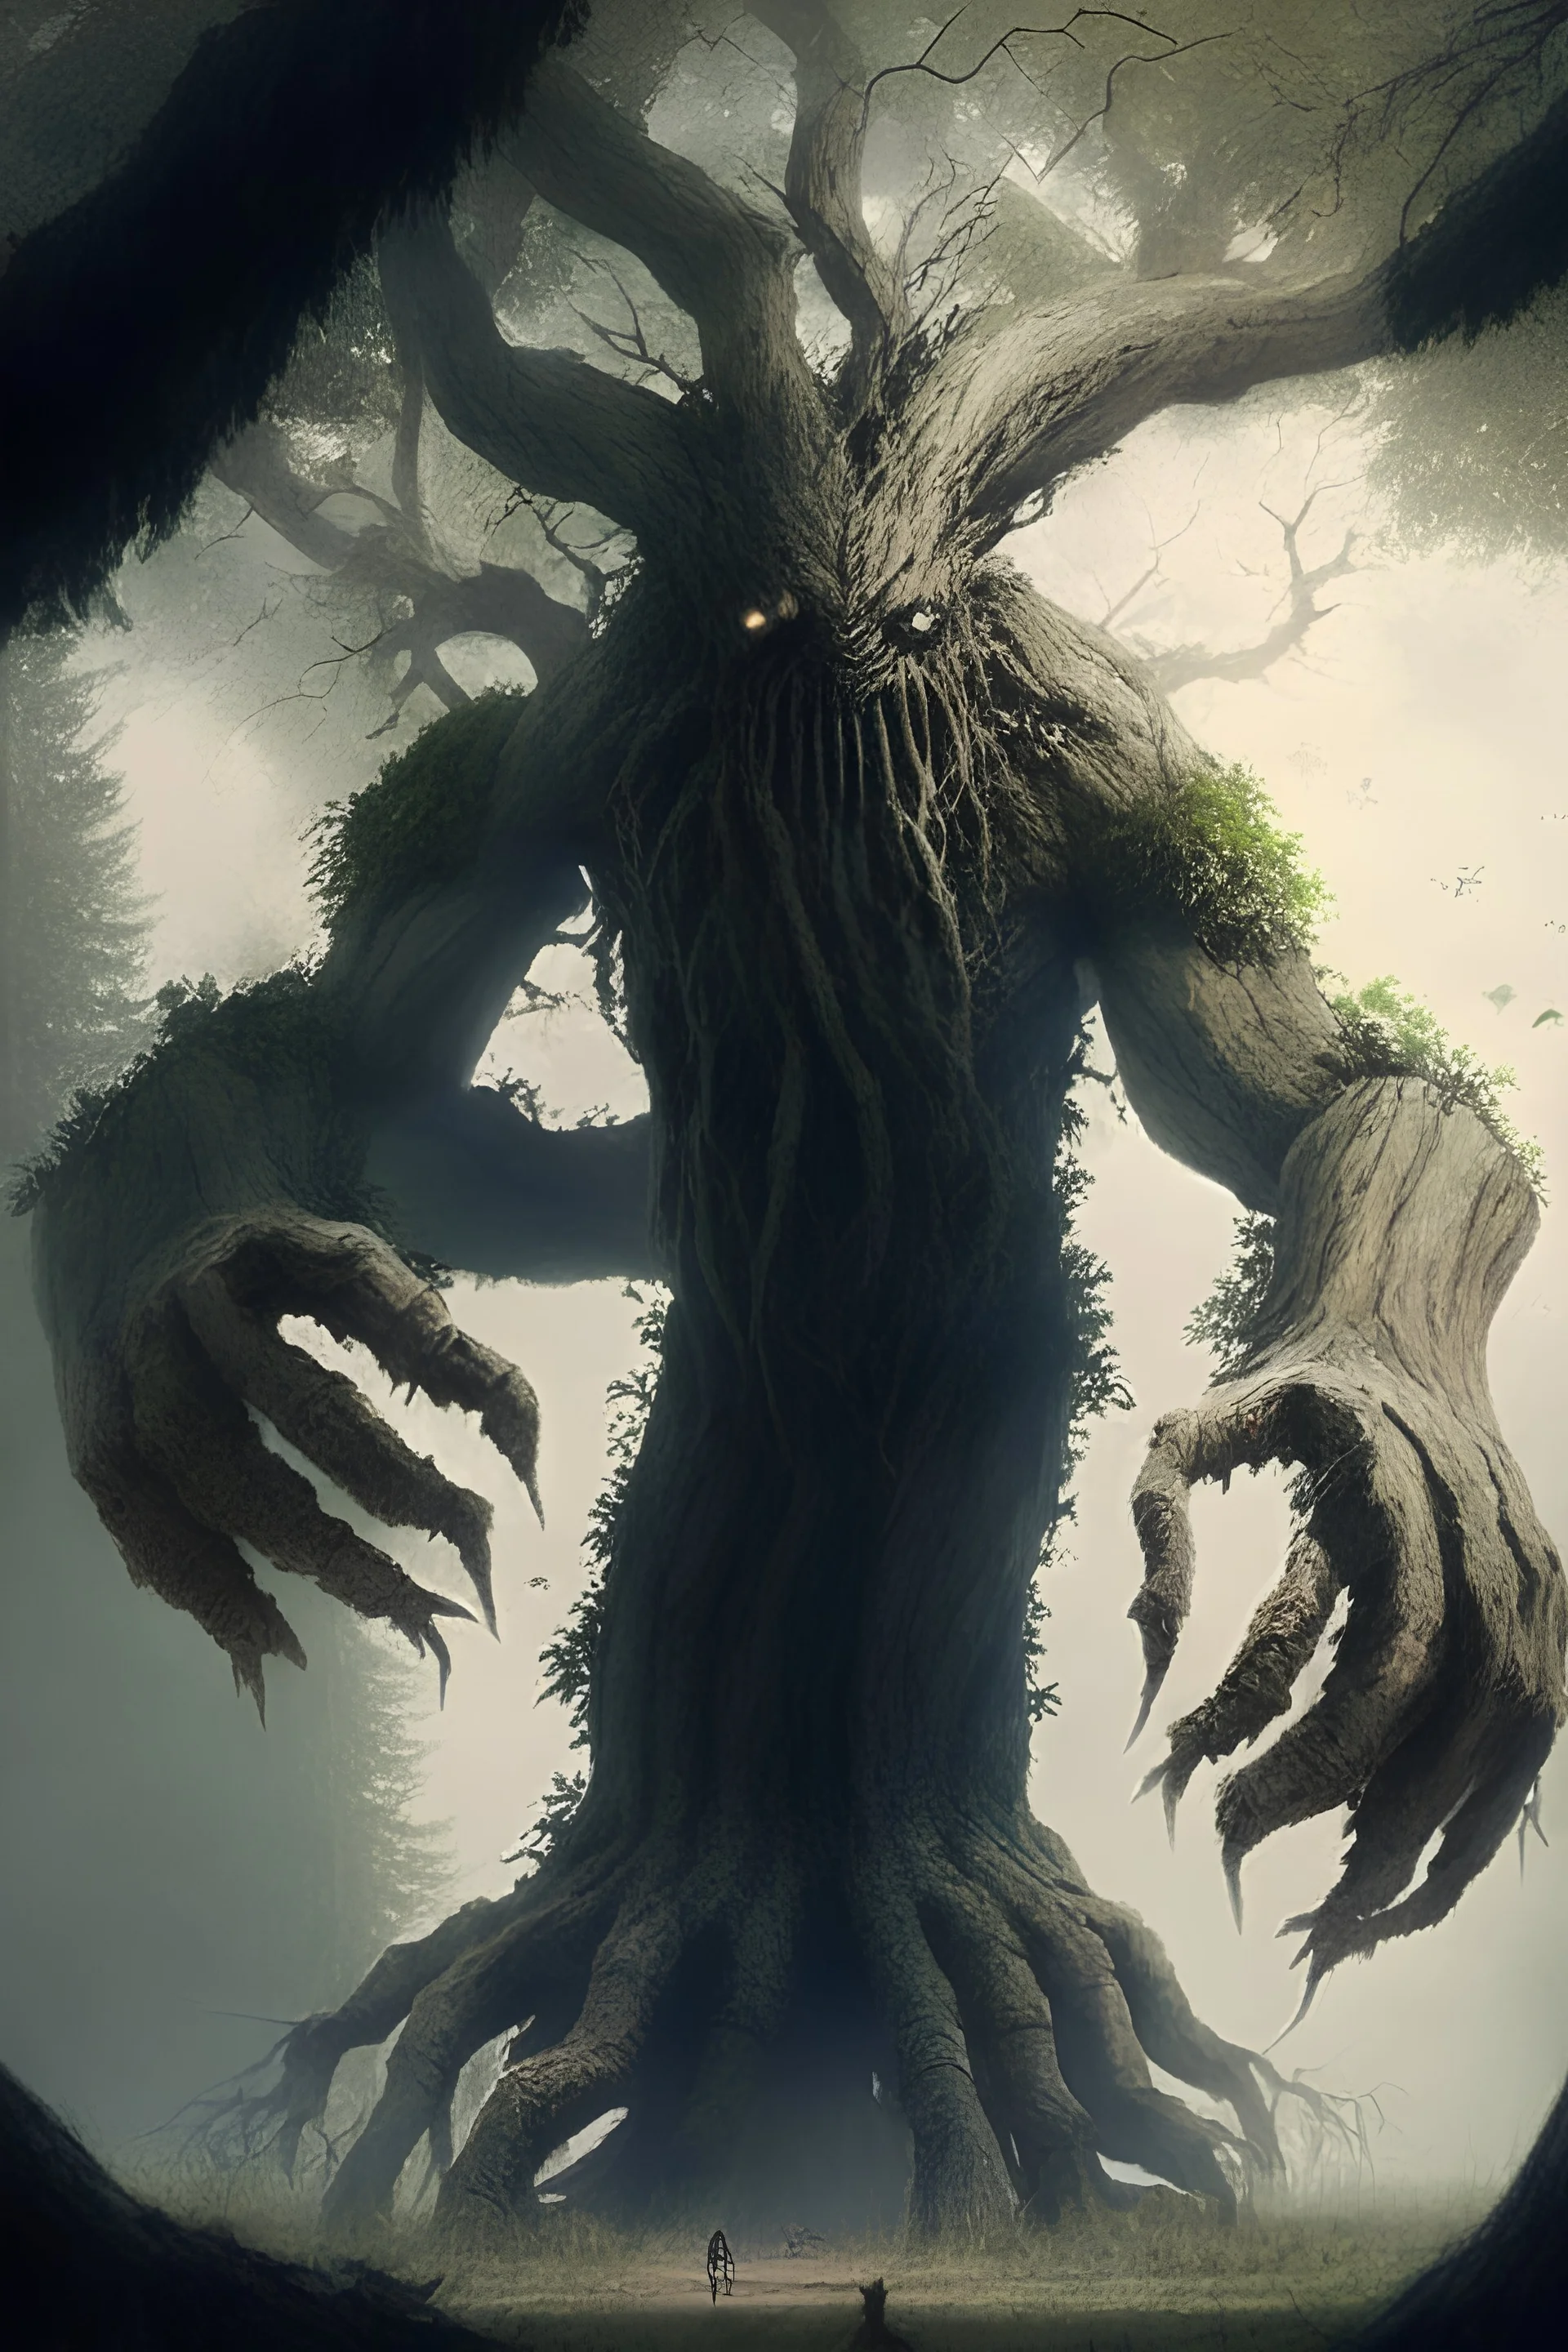 Very big tree beast with long hands